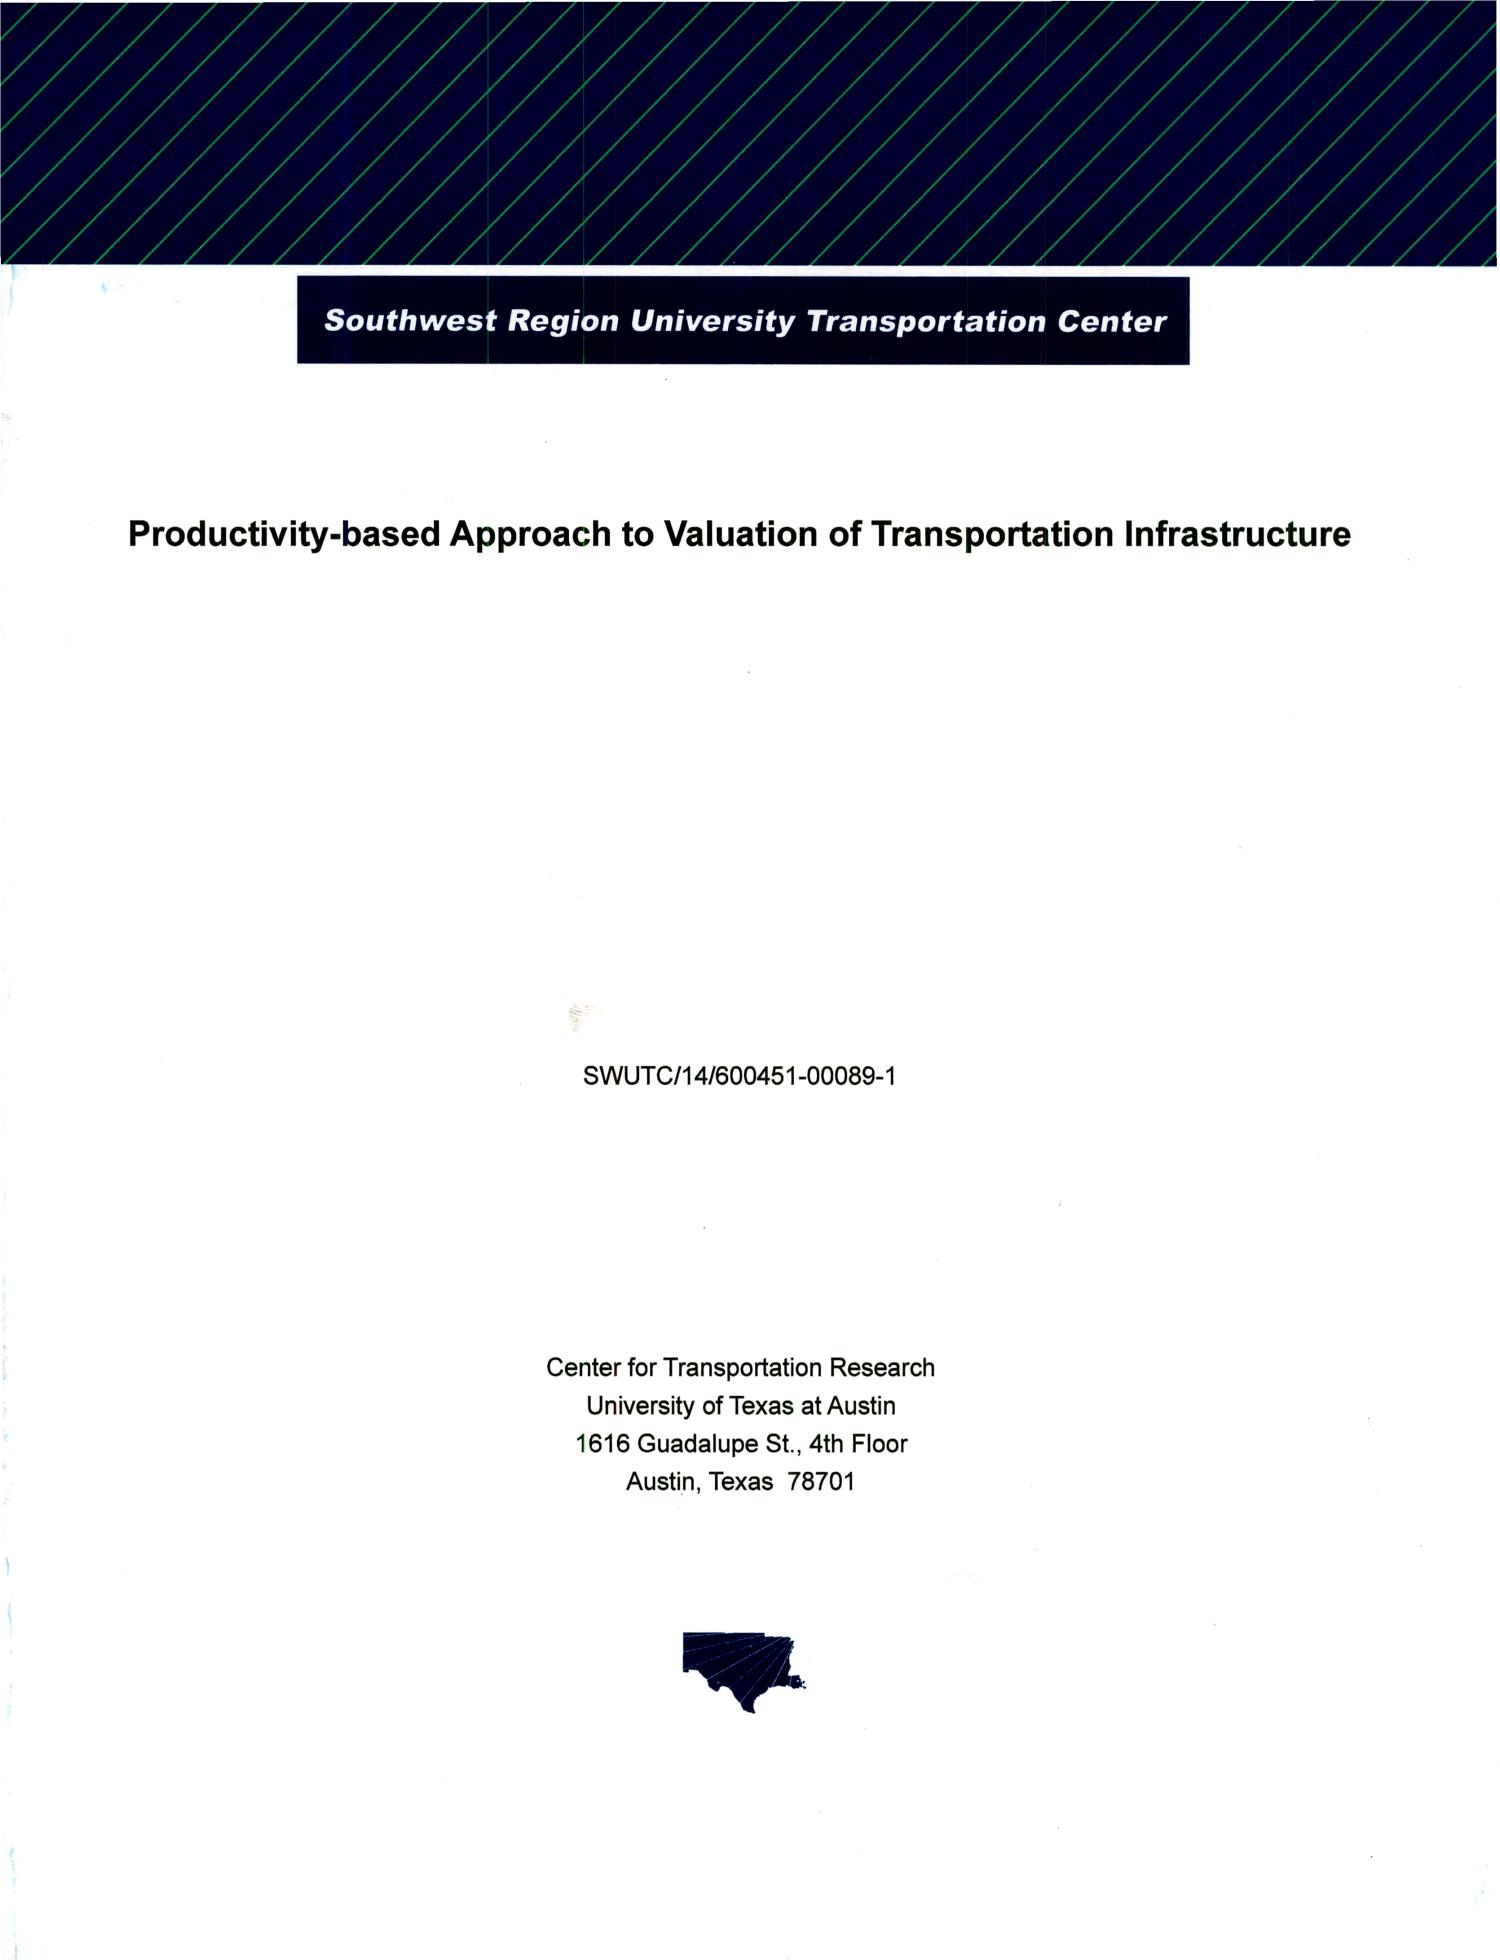 Productivity-Based Approach to Valuation of Transportation Infrastructure
                                                
                                                    Southwest Region University Transporatation Center
                                                